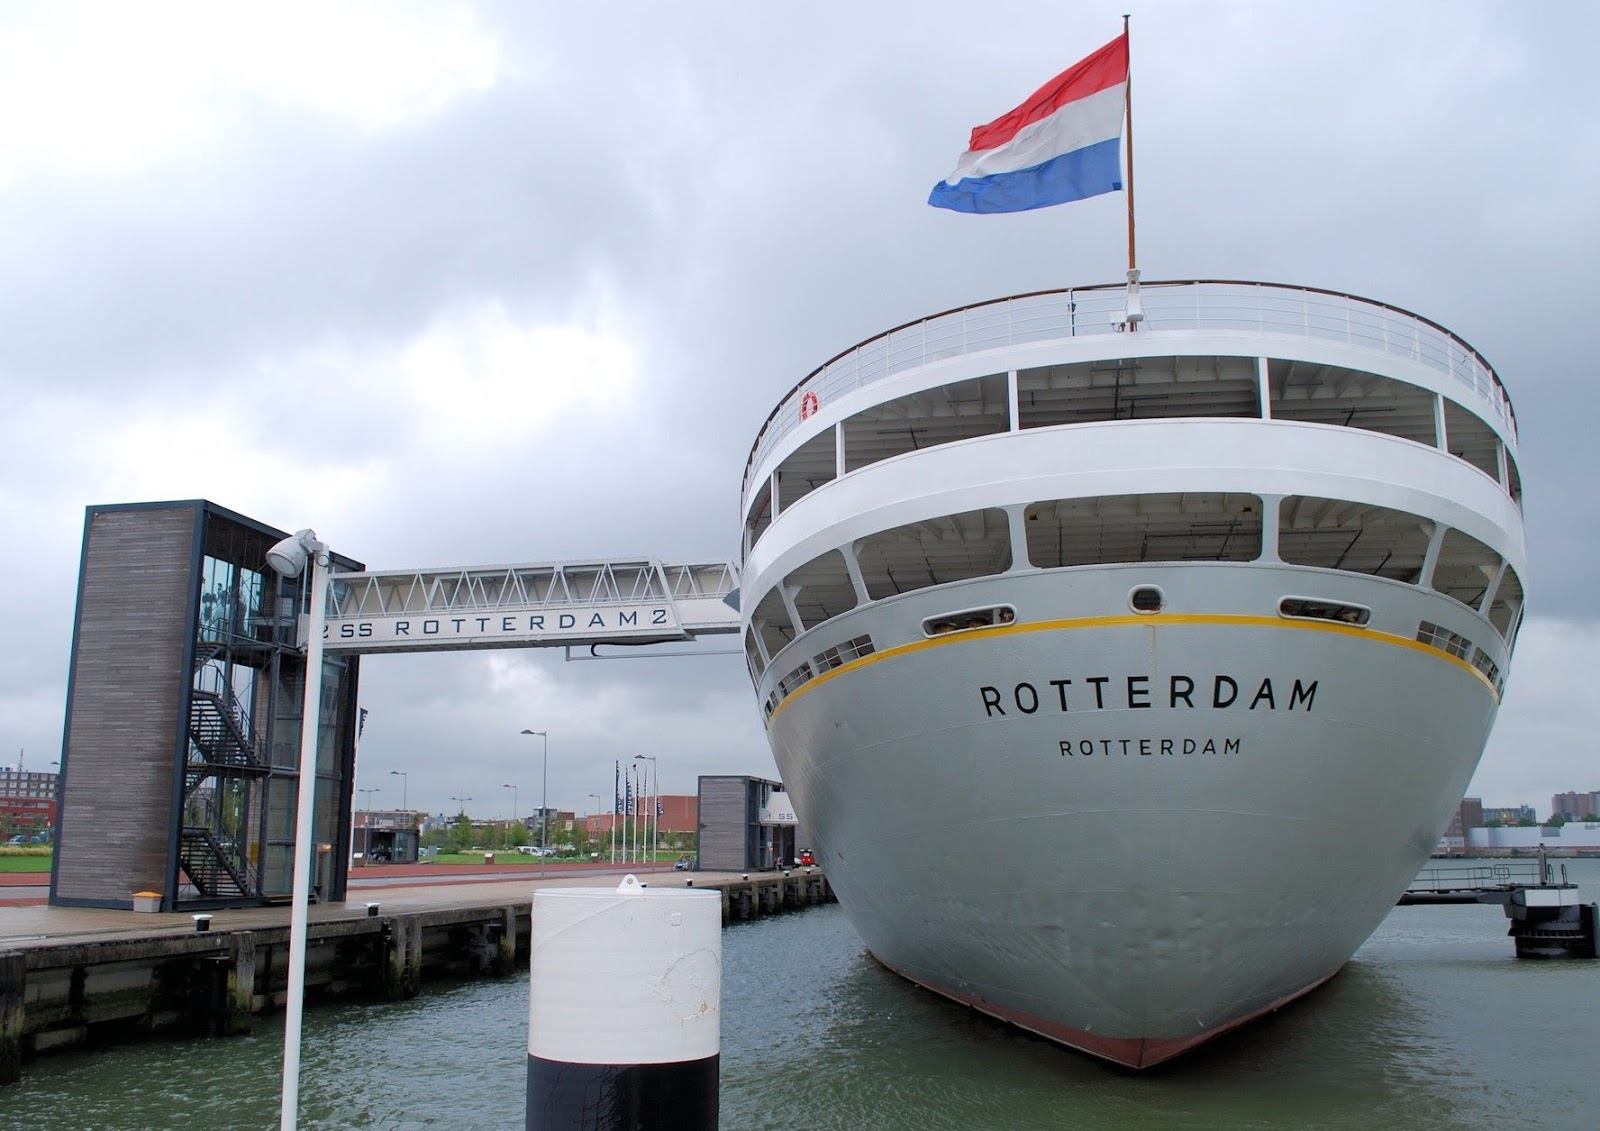 SS Rotterdam, barco hotel y restaurant en Holanda